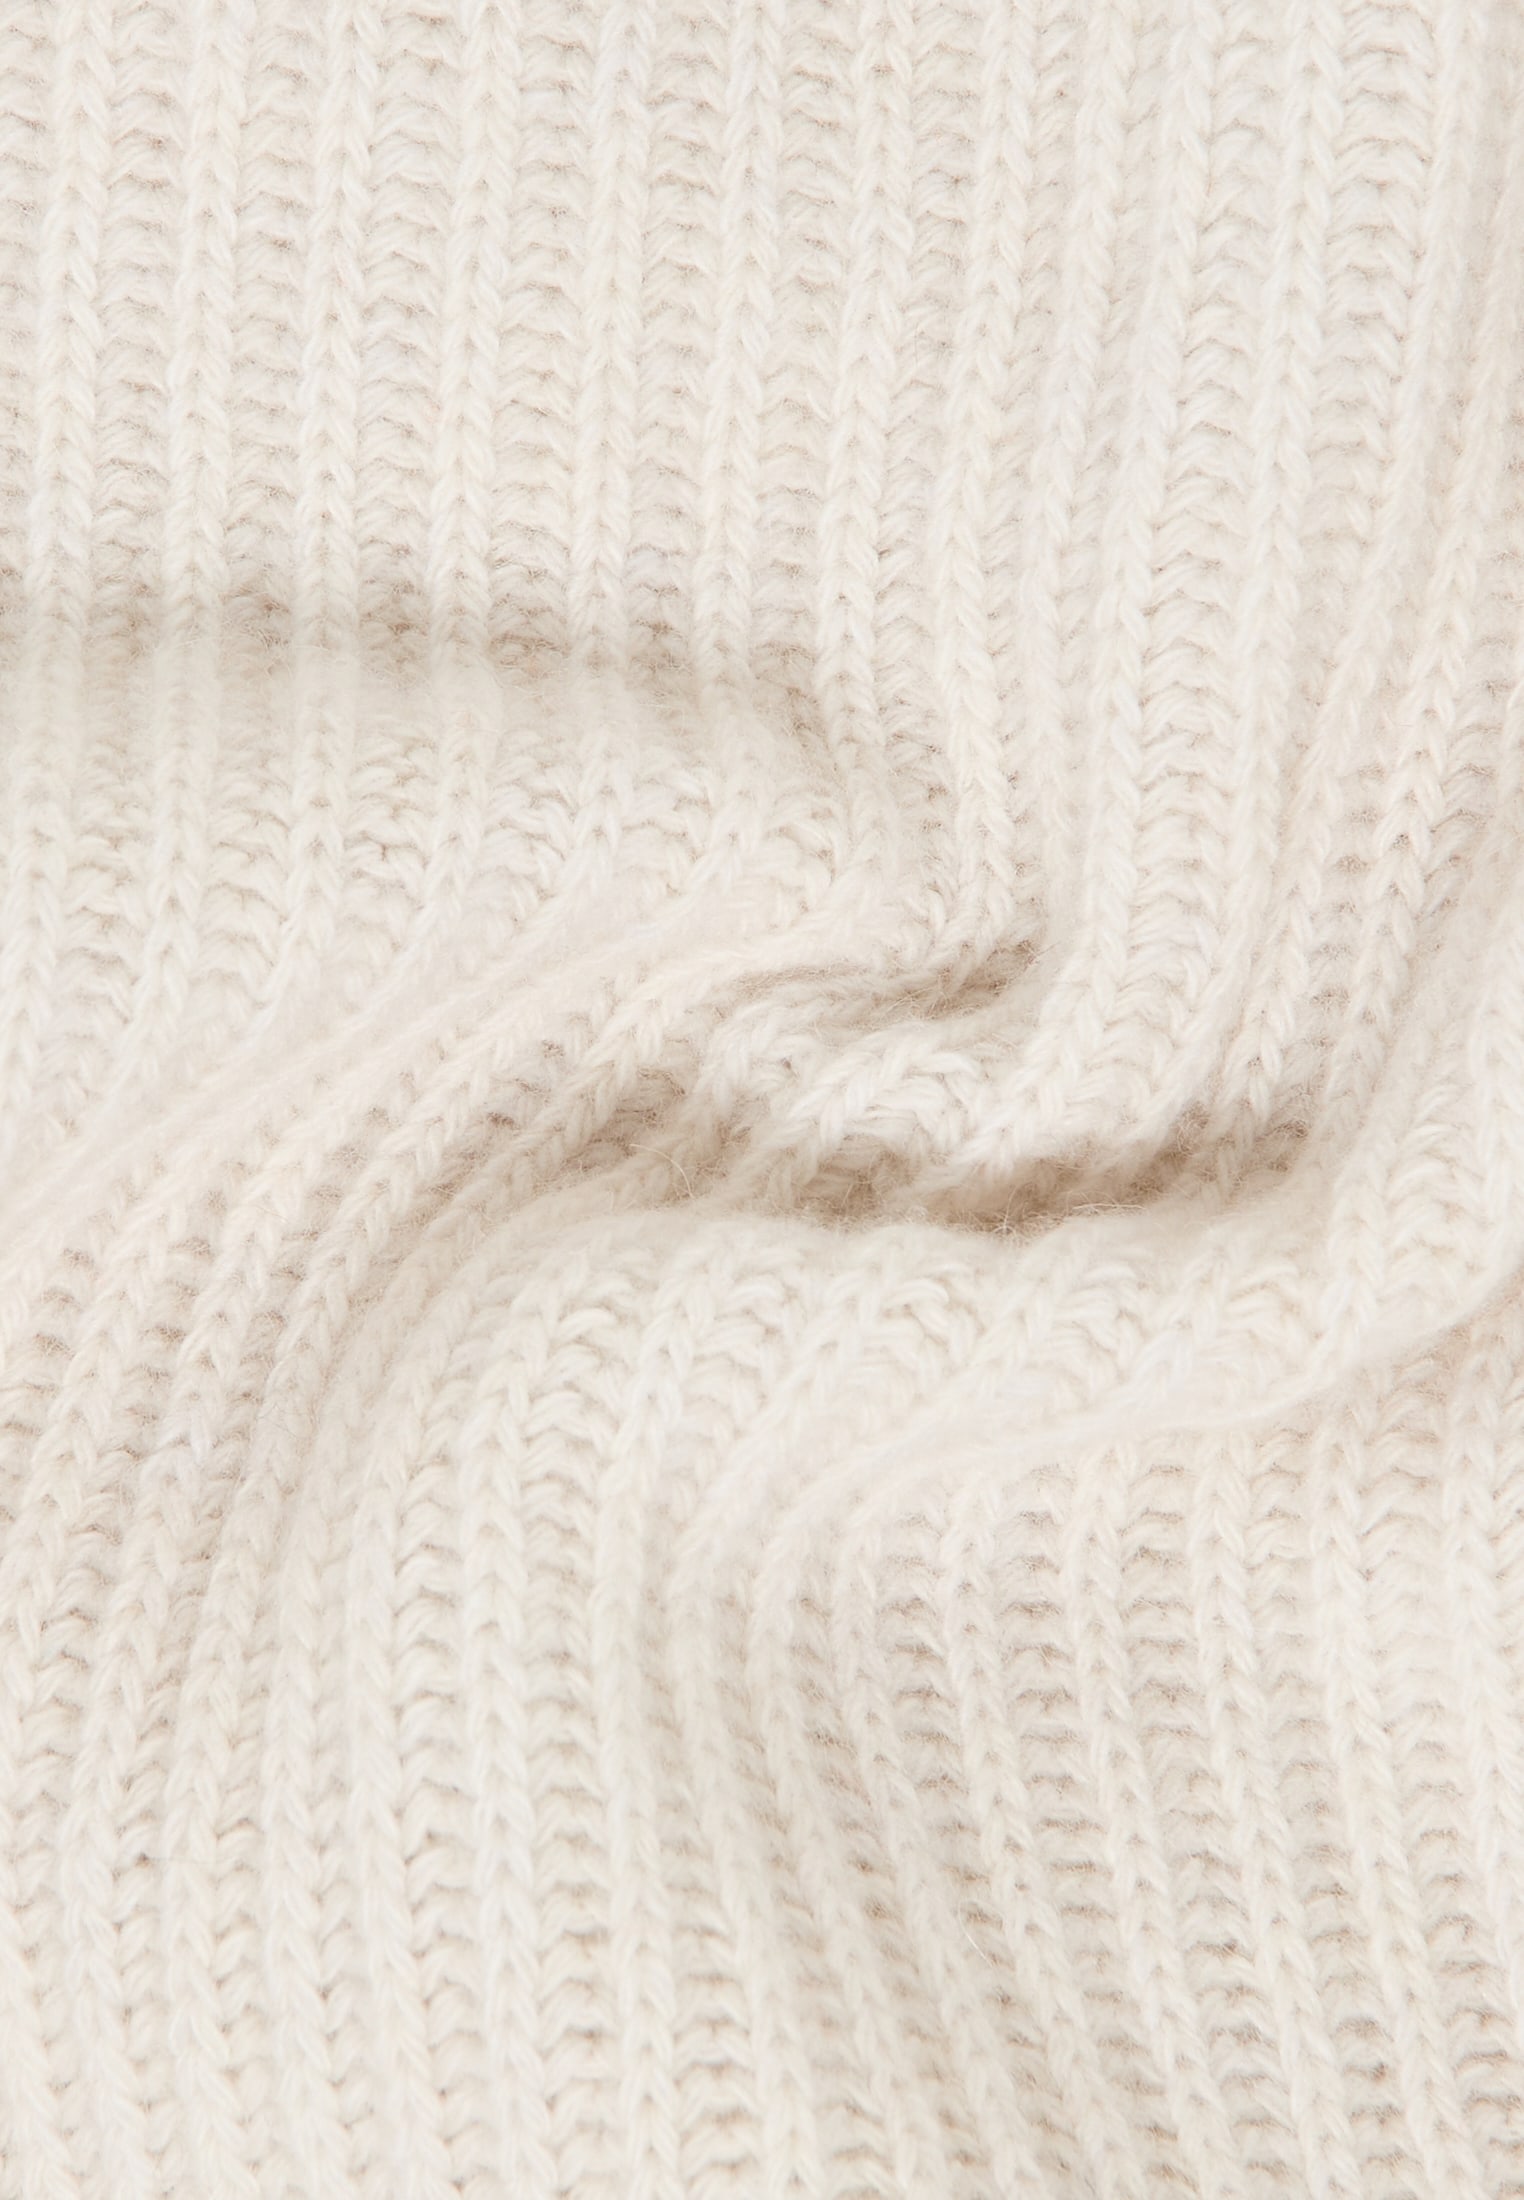 Gebreide pullover in bruin vlakte